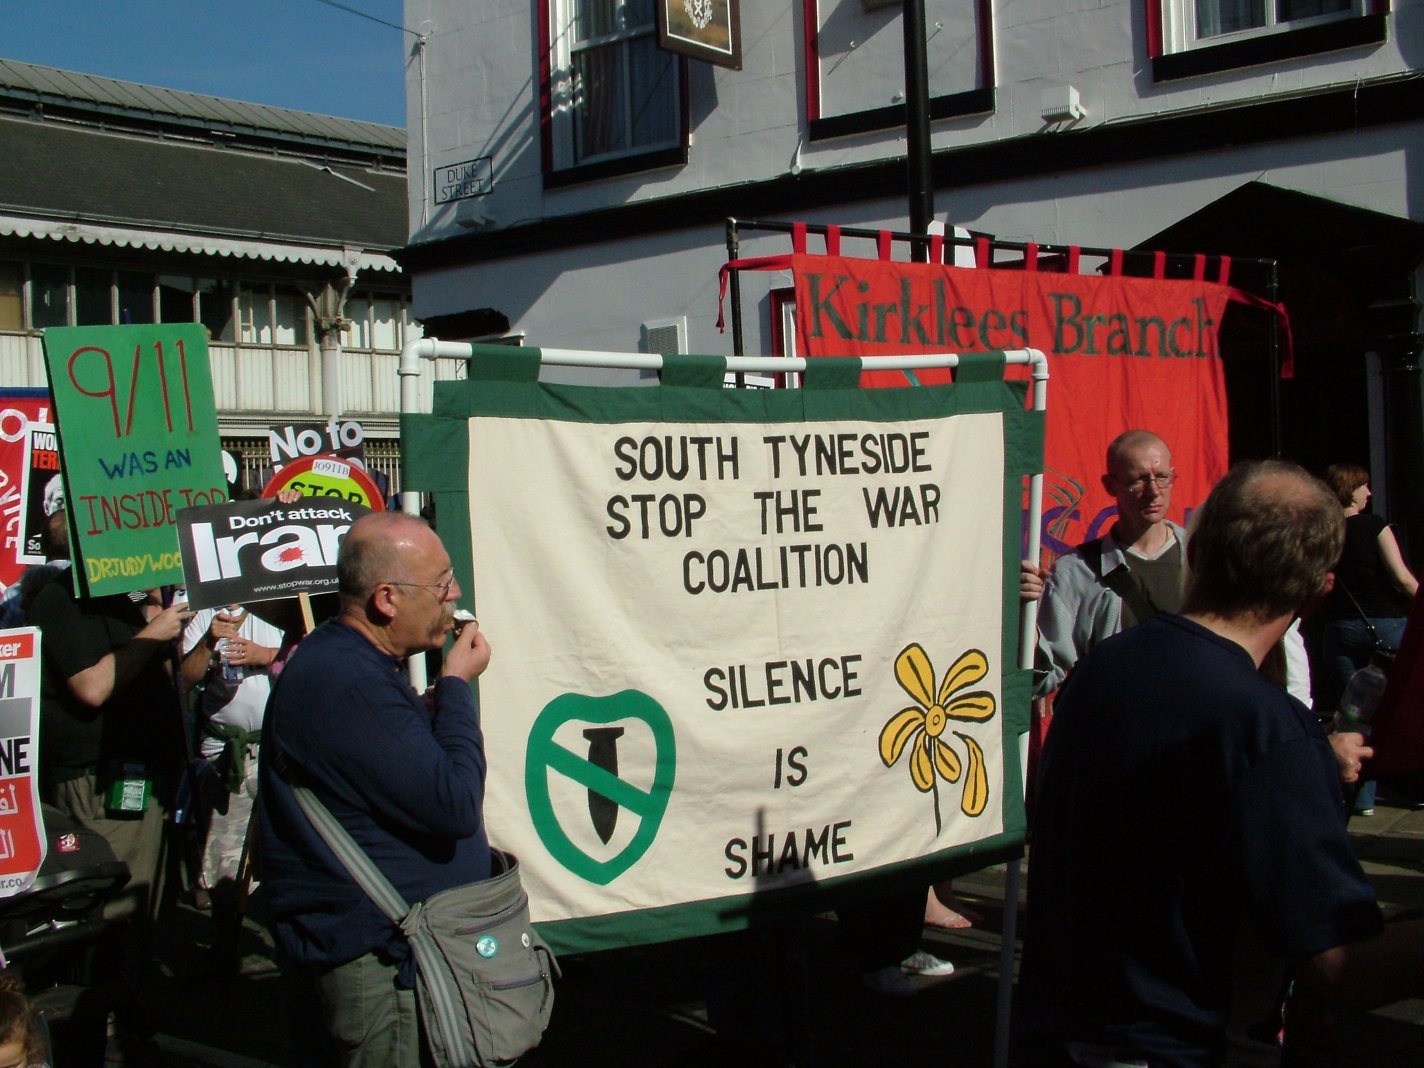 South Tyneside Stop the War